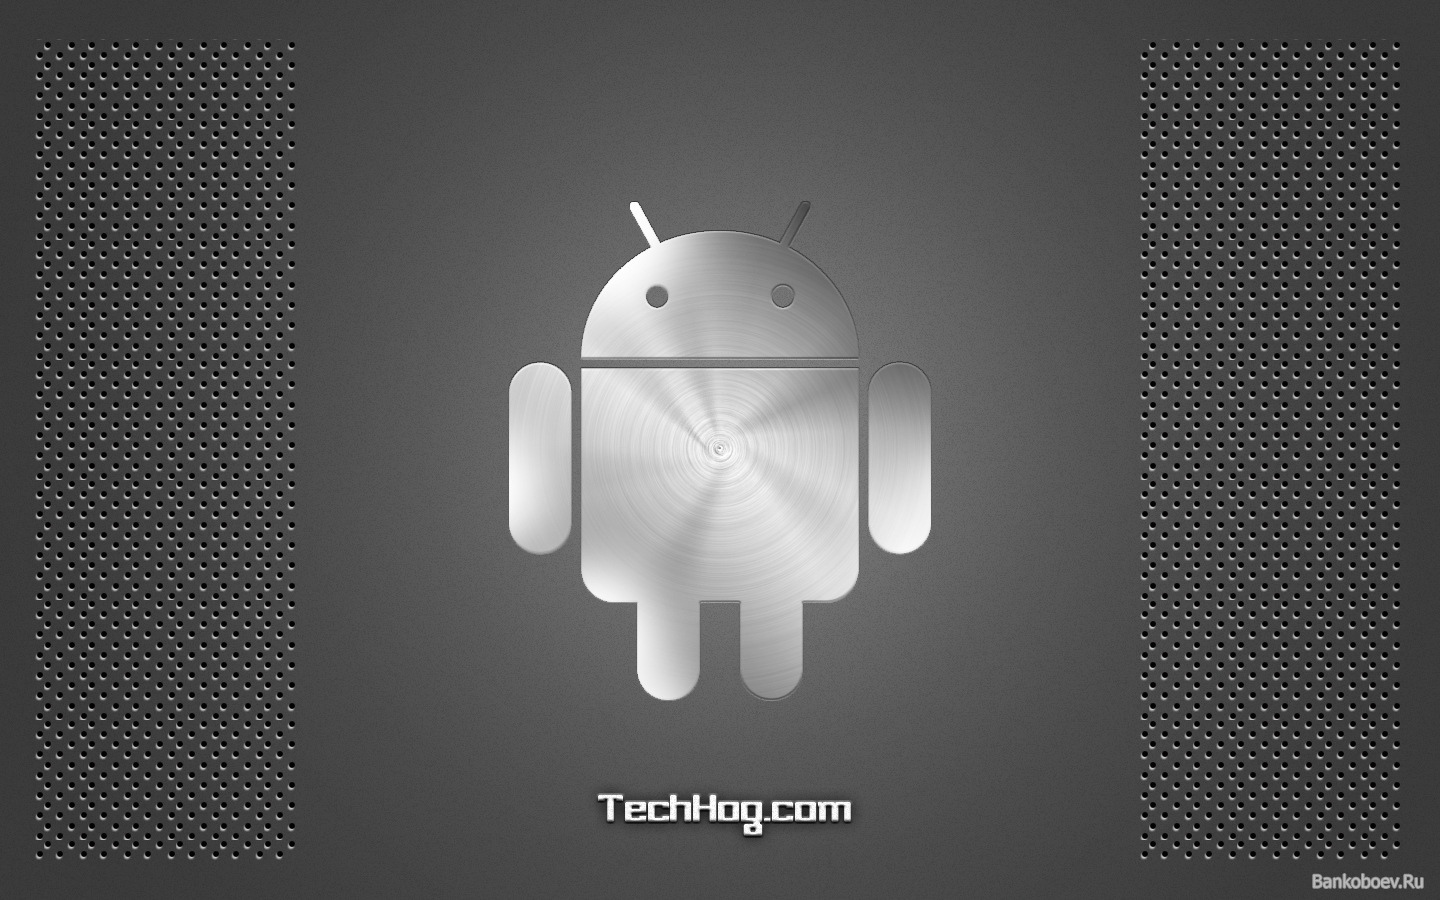 14821 Заставки и Обои Андроид (Android) на телефон. Скачать  картинки бесплатно